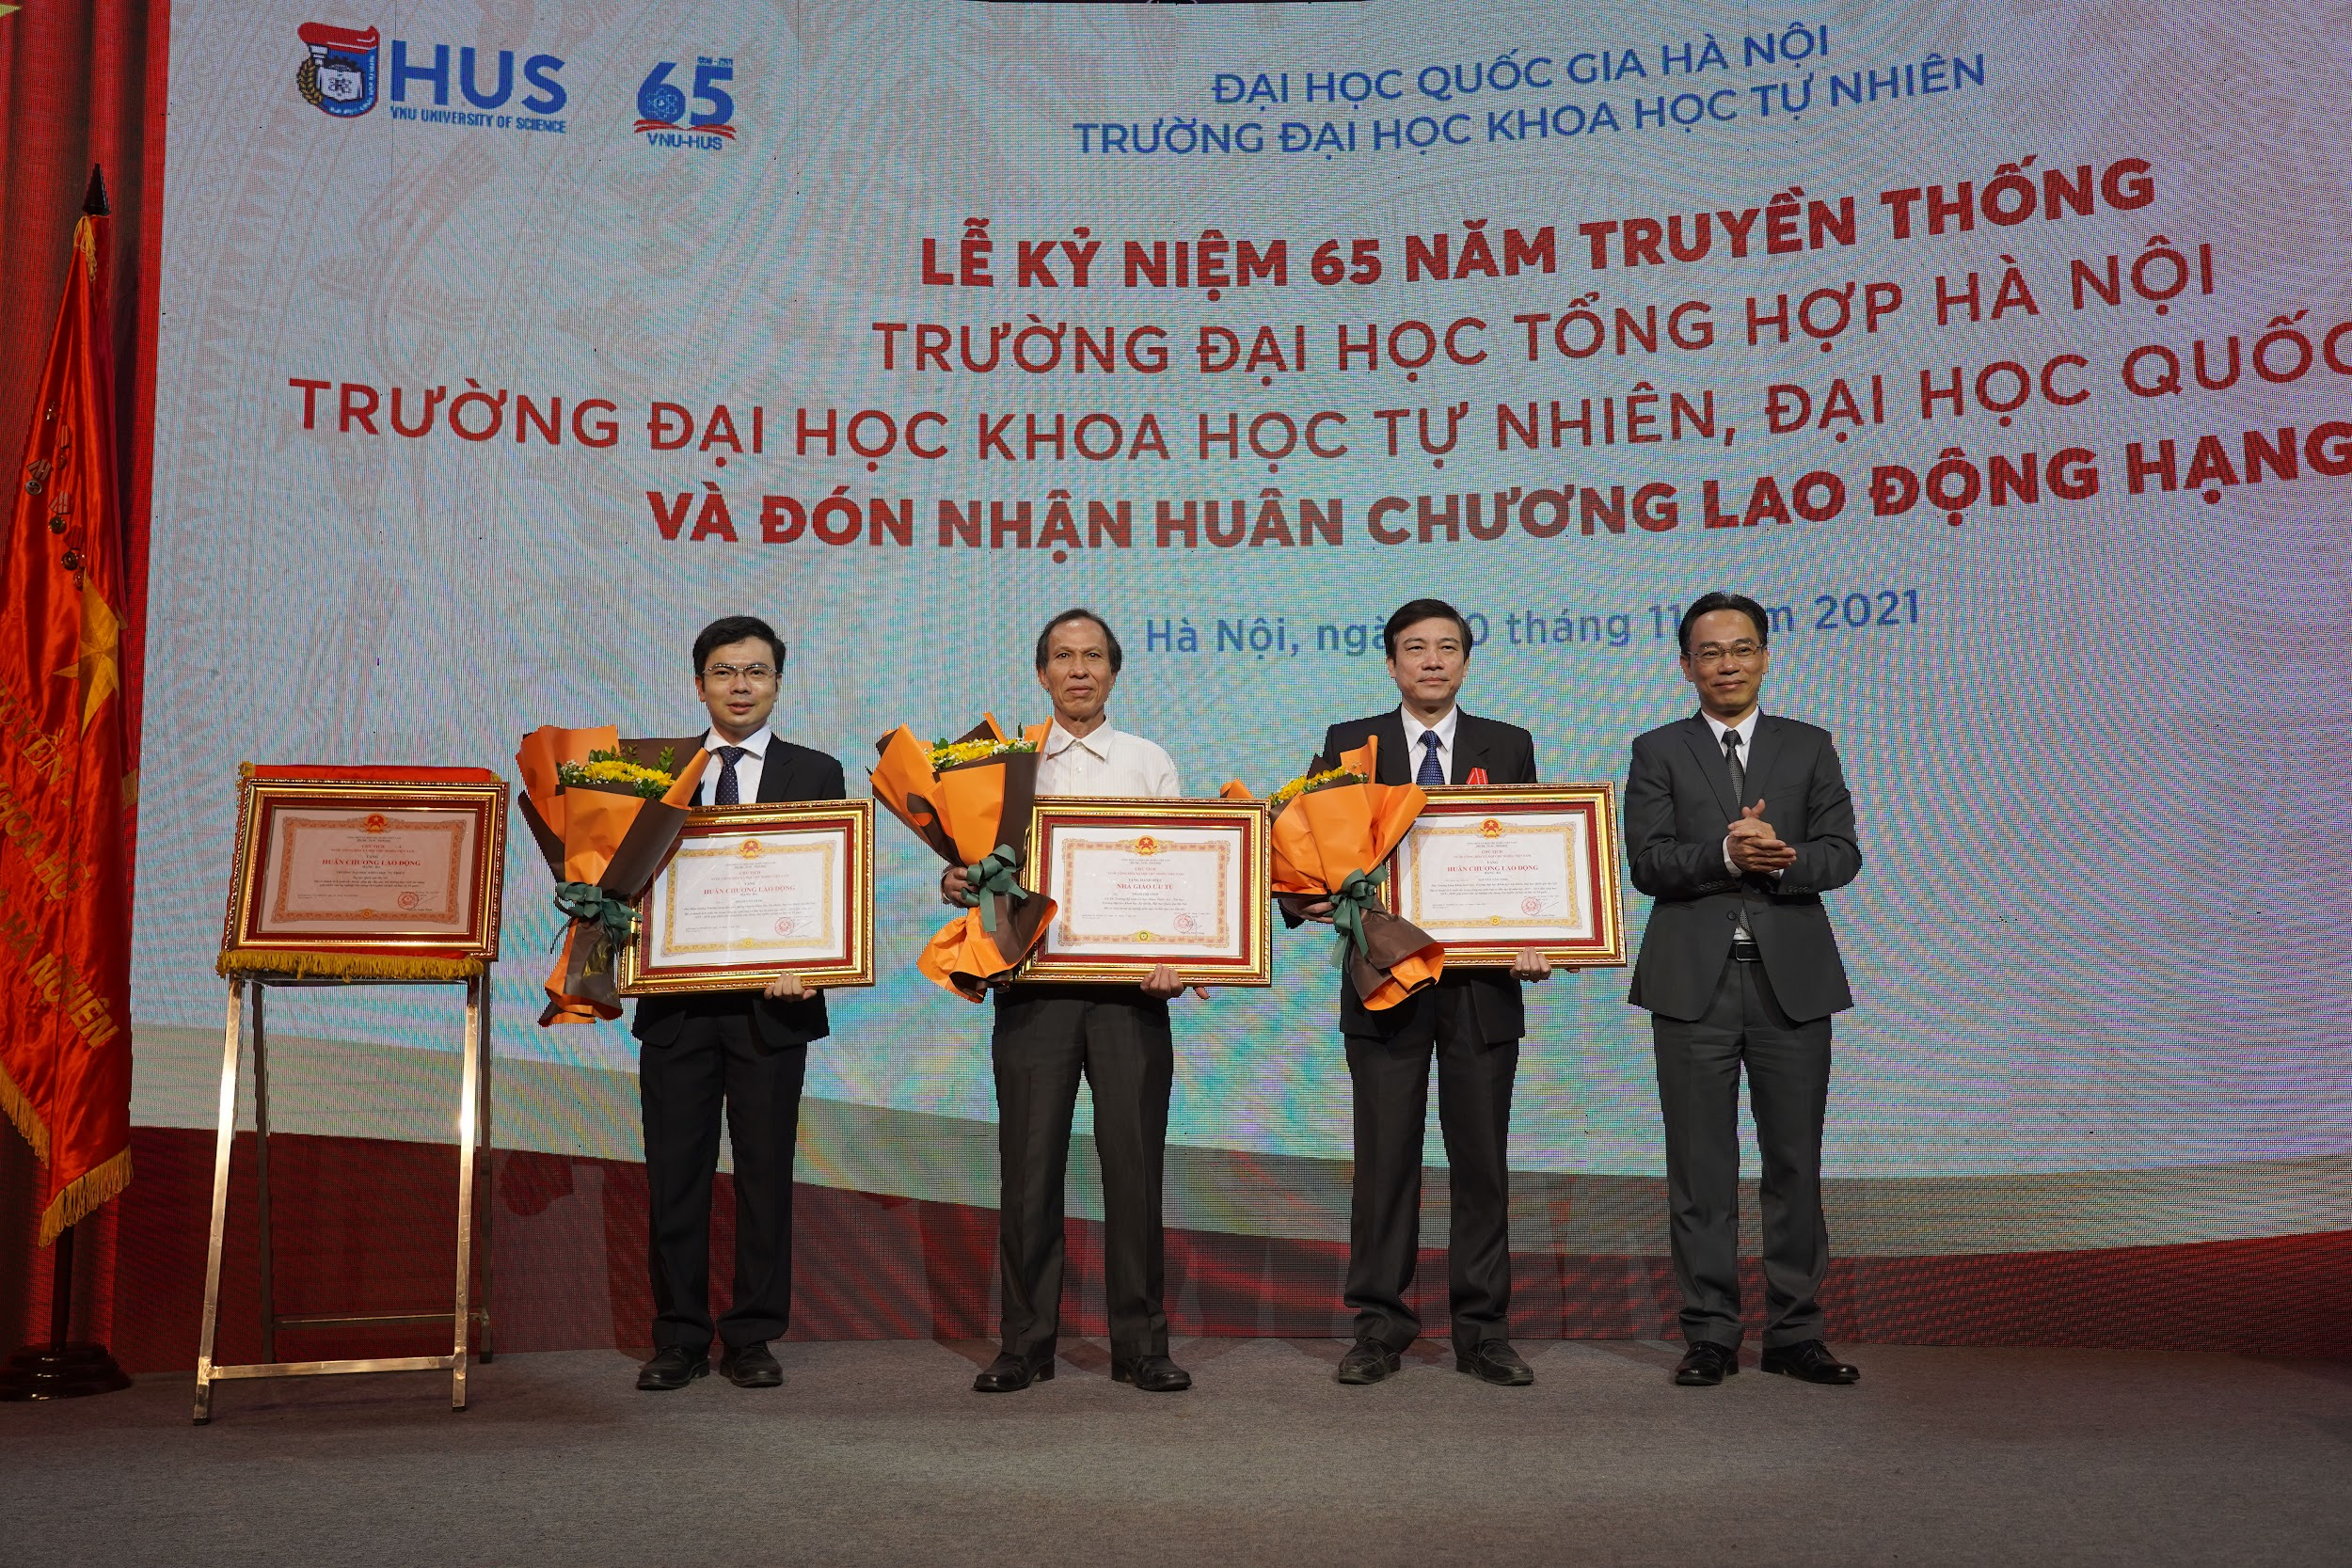 VNU-HUS celebrates its 65th anniversary